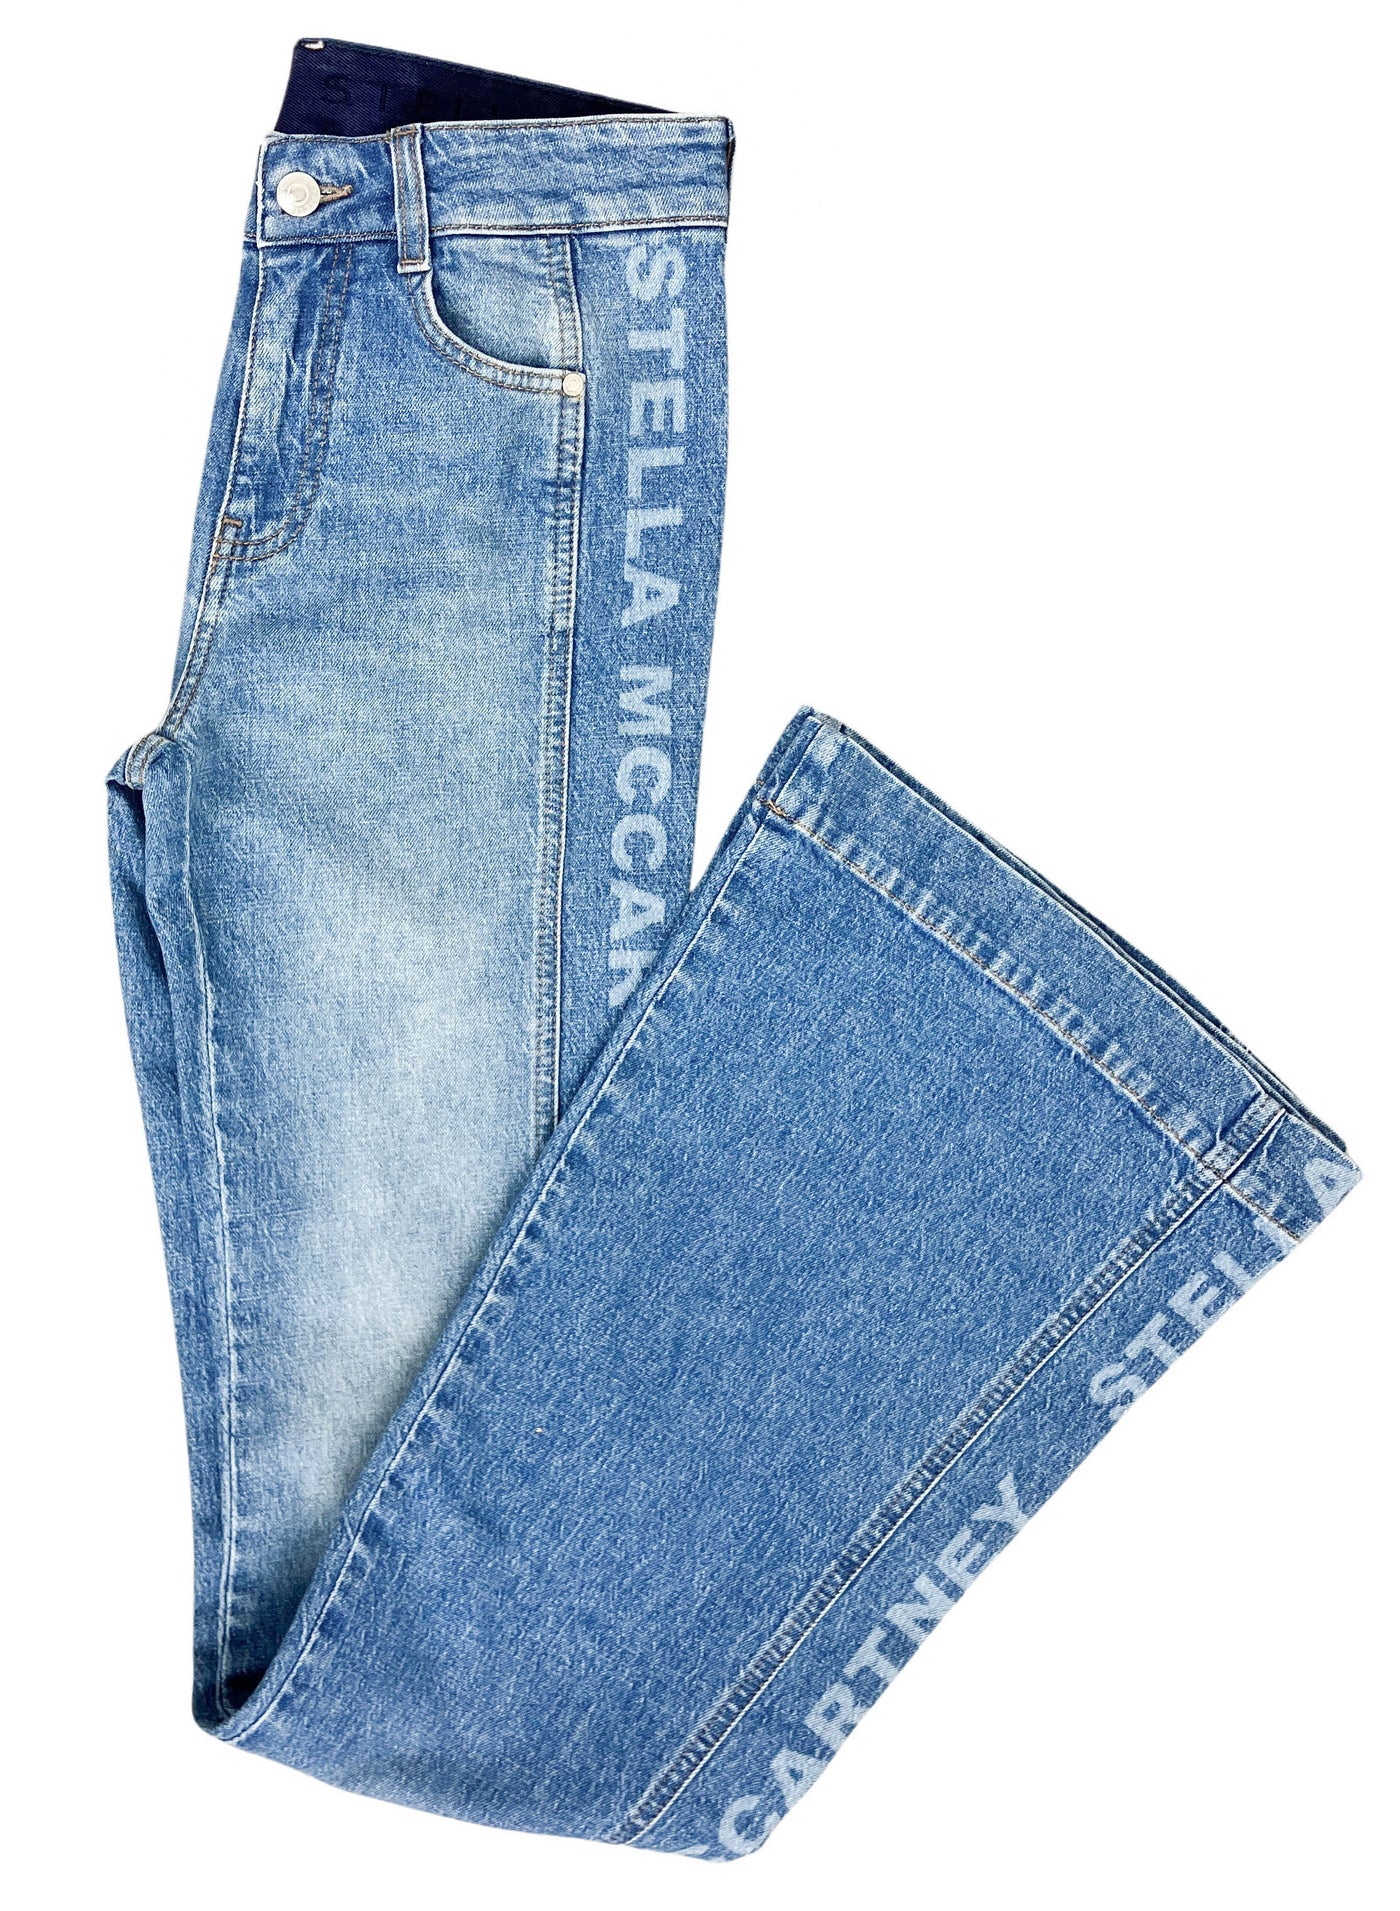 Stella McCartney Flared Leg Logo Jeans - Discounts on Stella McCartney at UAL